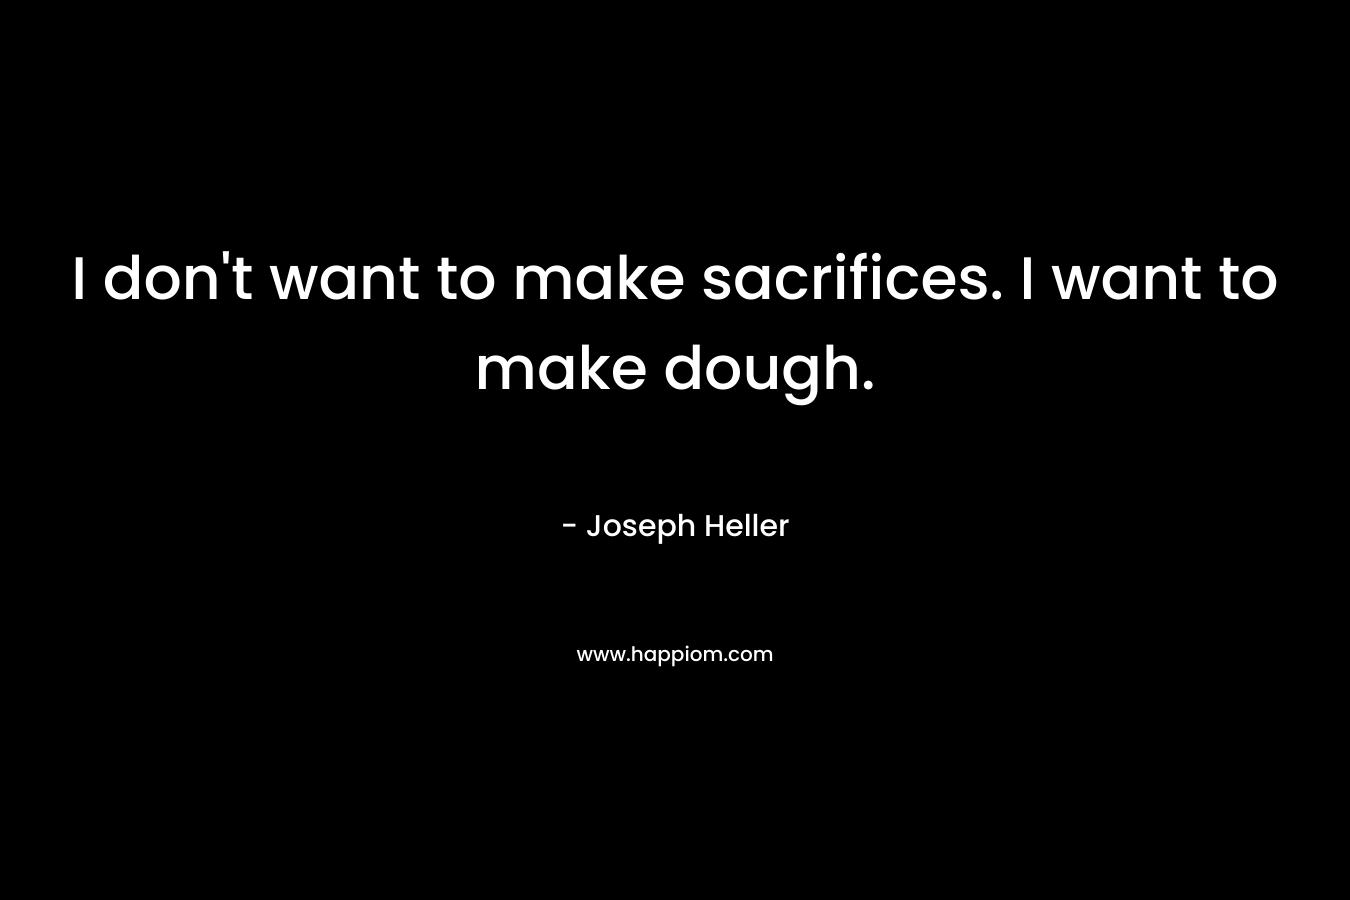 I don't want to make sacrifices. I want to make dough.